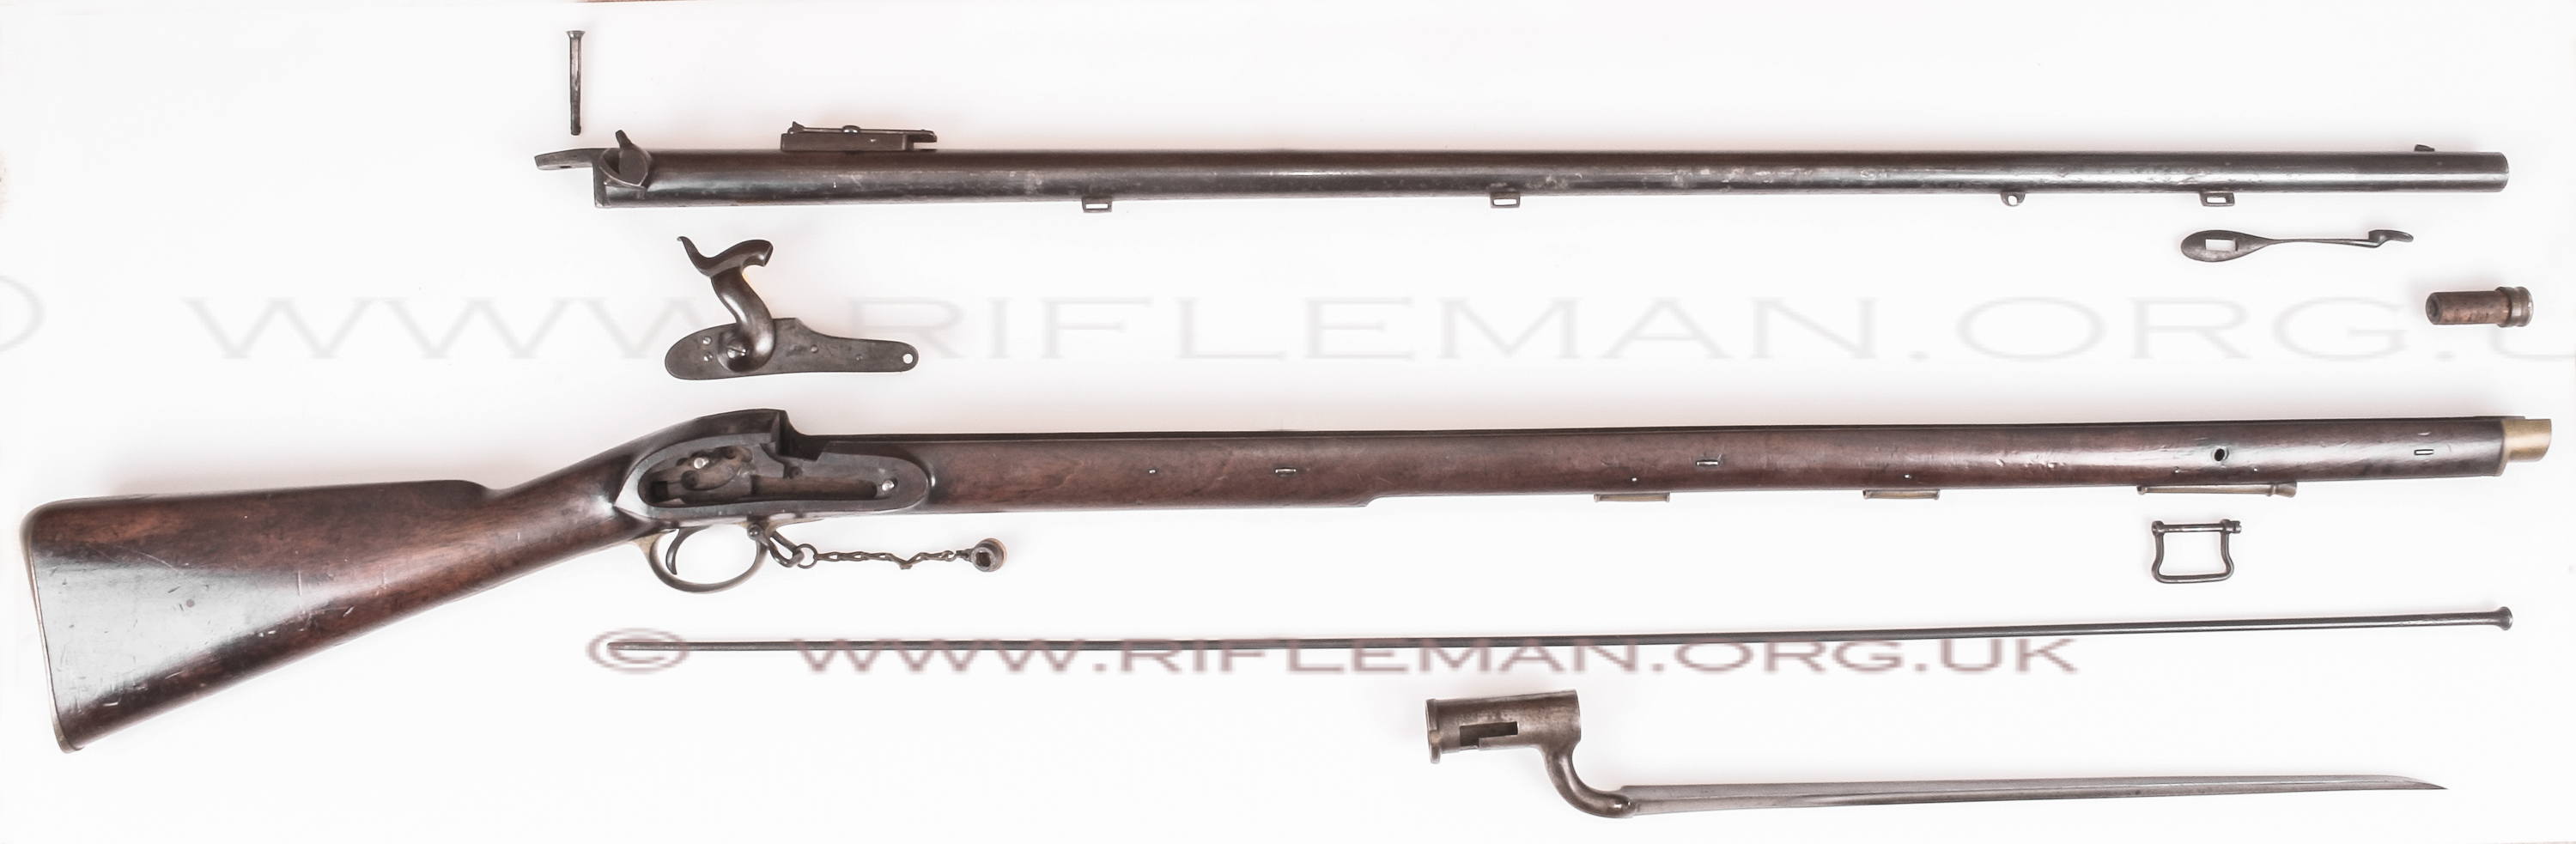 British Pattern 1914 Enfield Rifle - Ww2 Rifle - Sticker